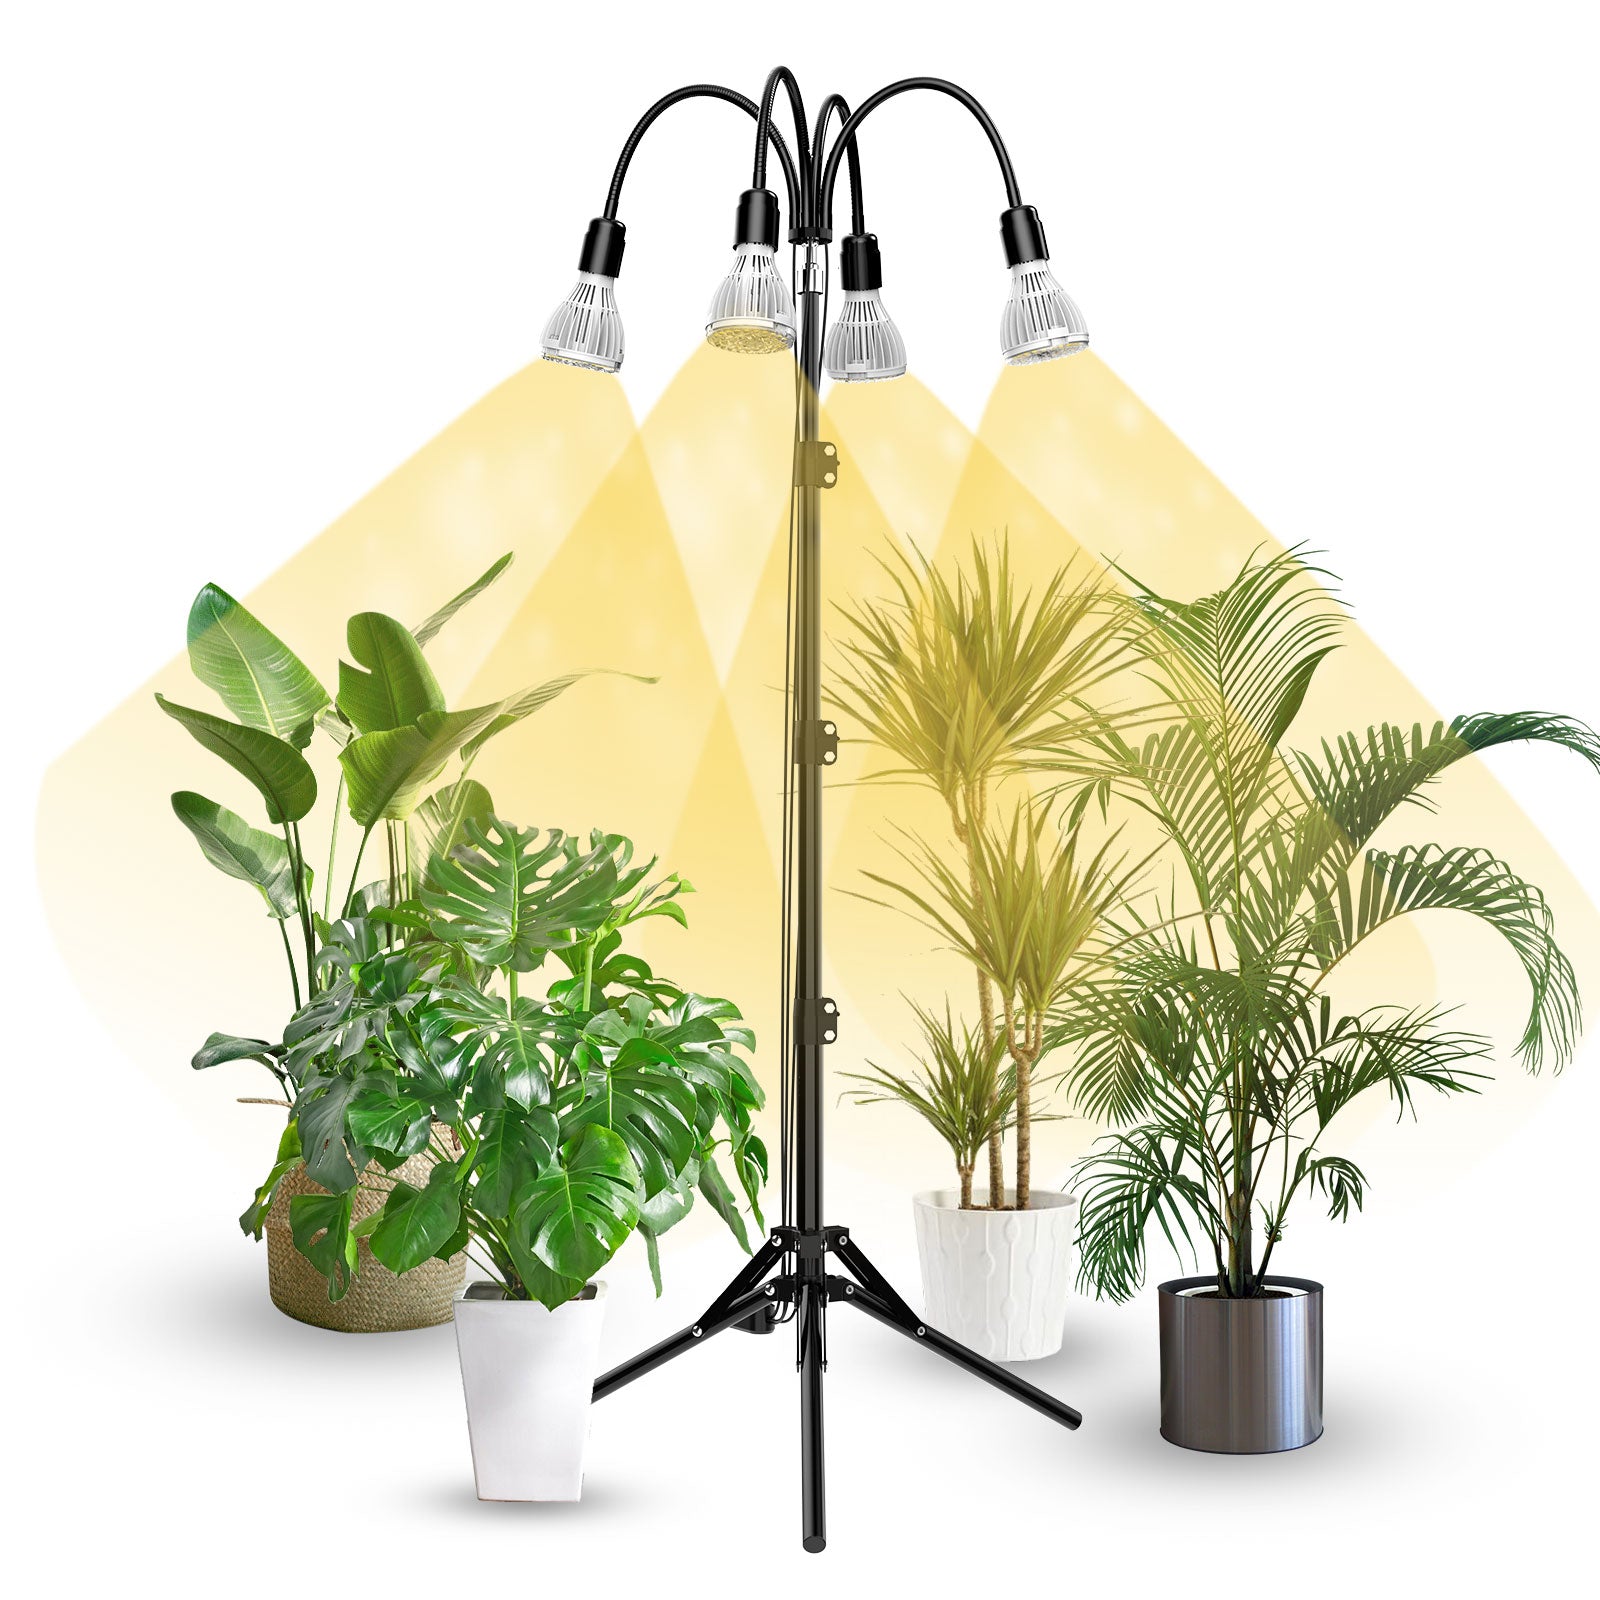 120W Grow Light with Adjustable Tripod Stand